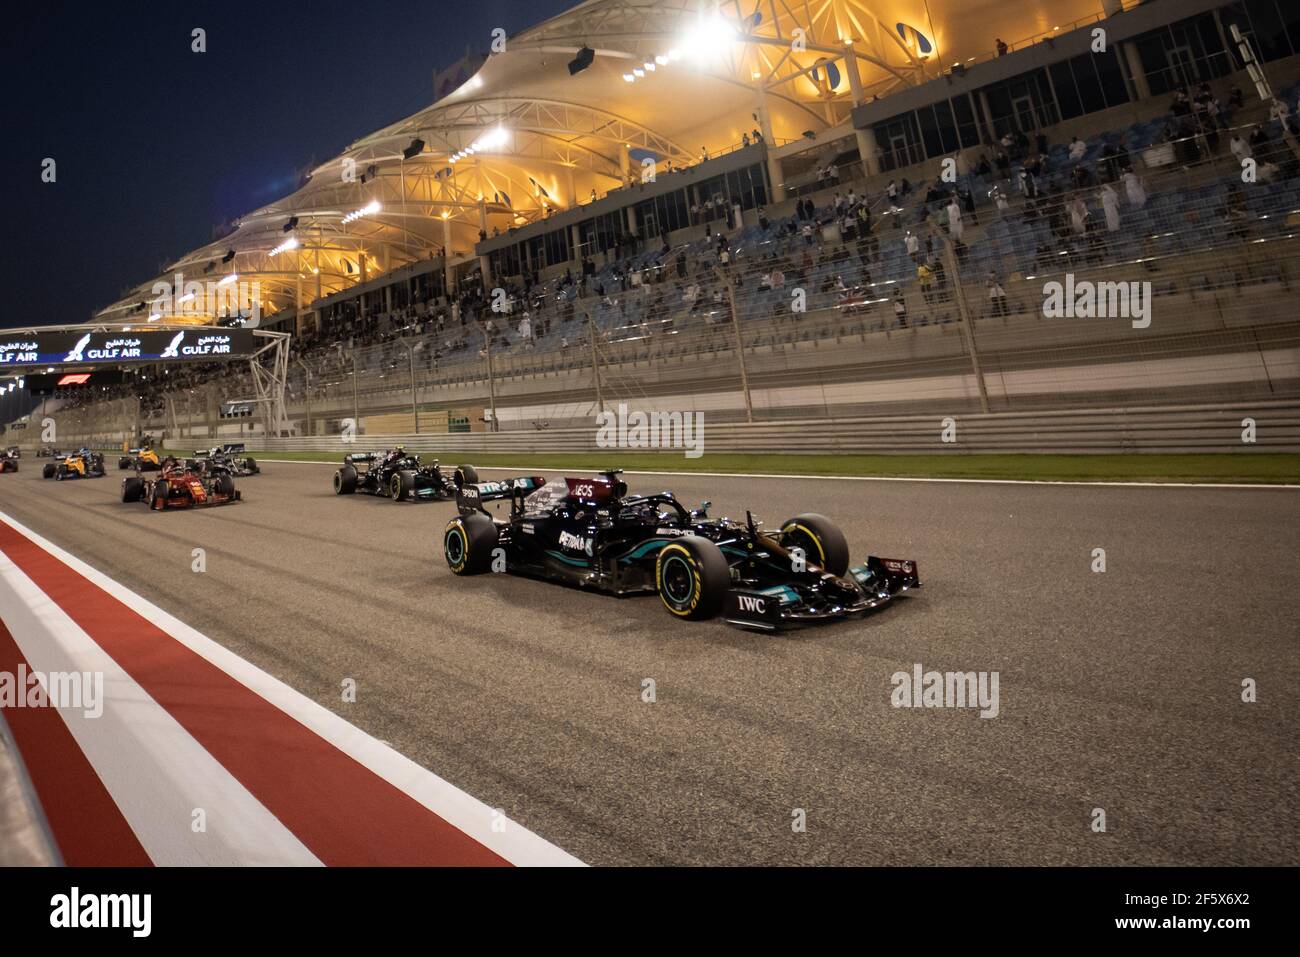 Sakhir, Bahrain. 28th Mar, 2021. Lewis Hamilton (GBR) Mercedes AMG F1 W12 at the start of the race. Bahrain Grand Prix, Sunday 28th March 2021. Sakhir, Bahrain. Credit: James Moy/Alamy Live News Stock Photo